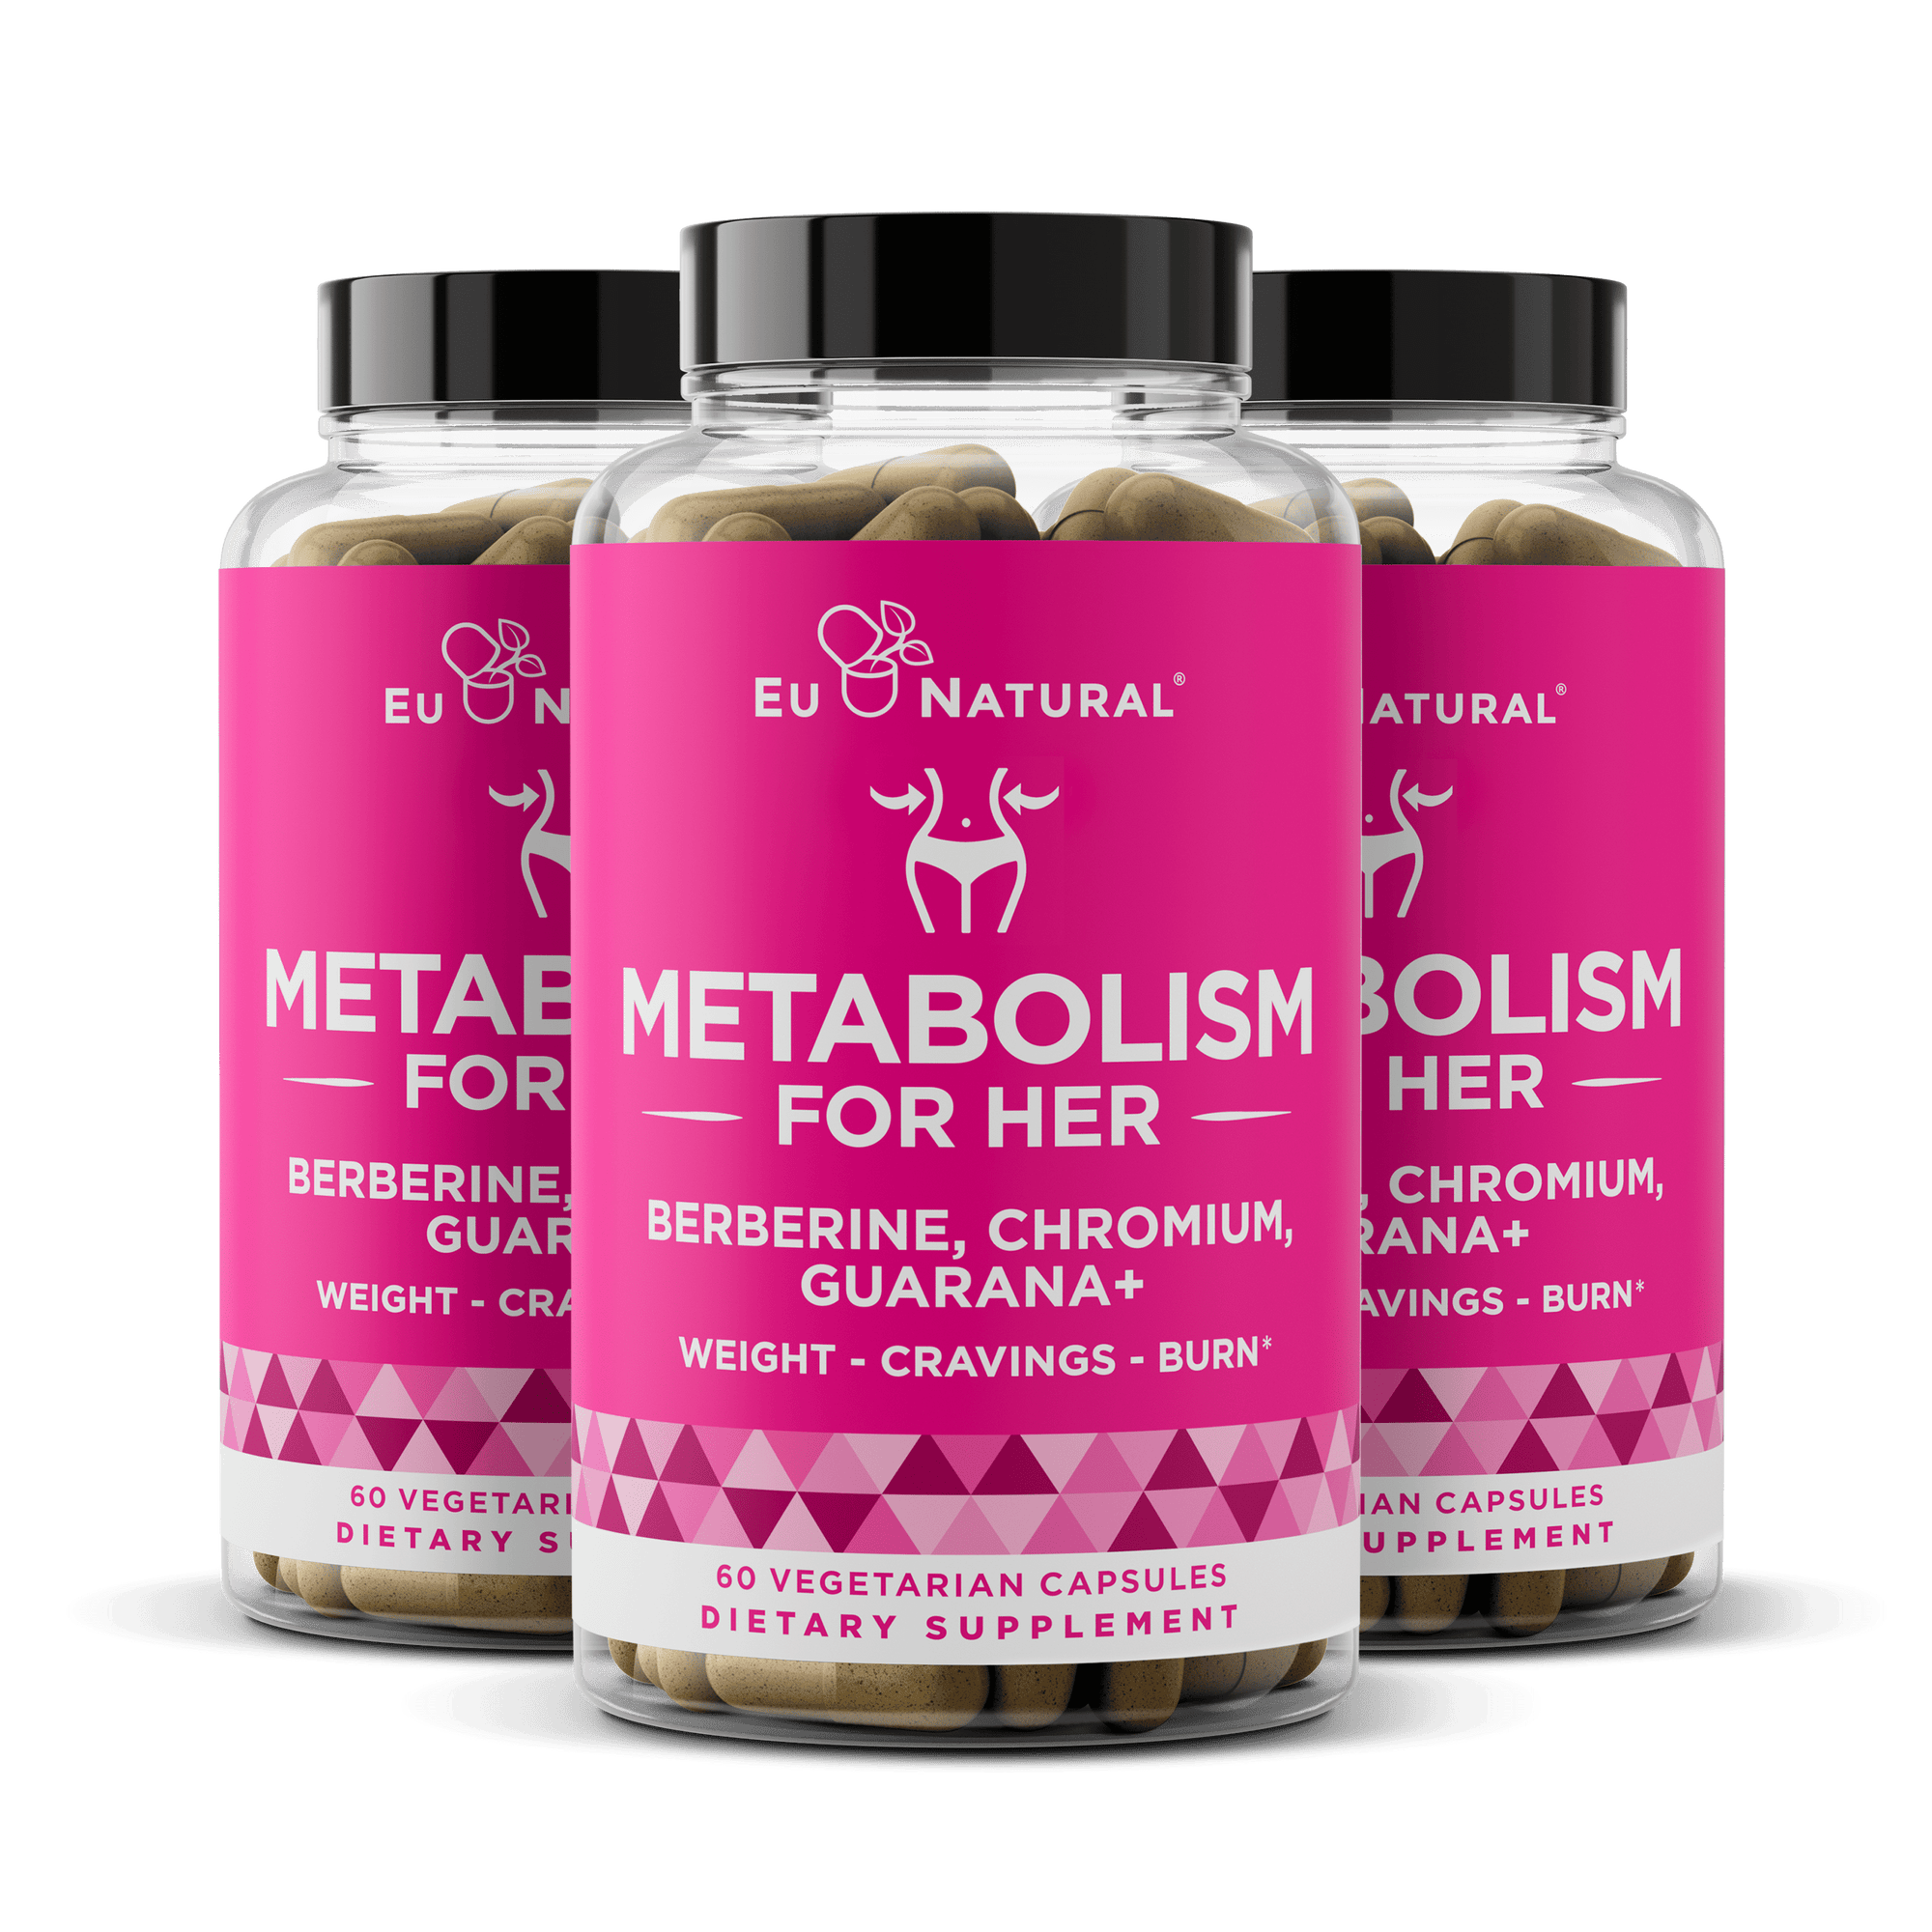 Eu Natural METABOLISM FOR HER – boost metabolism, control cravings, burn fat (3 pack)